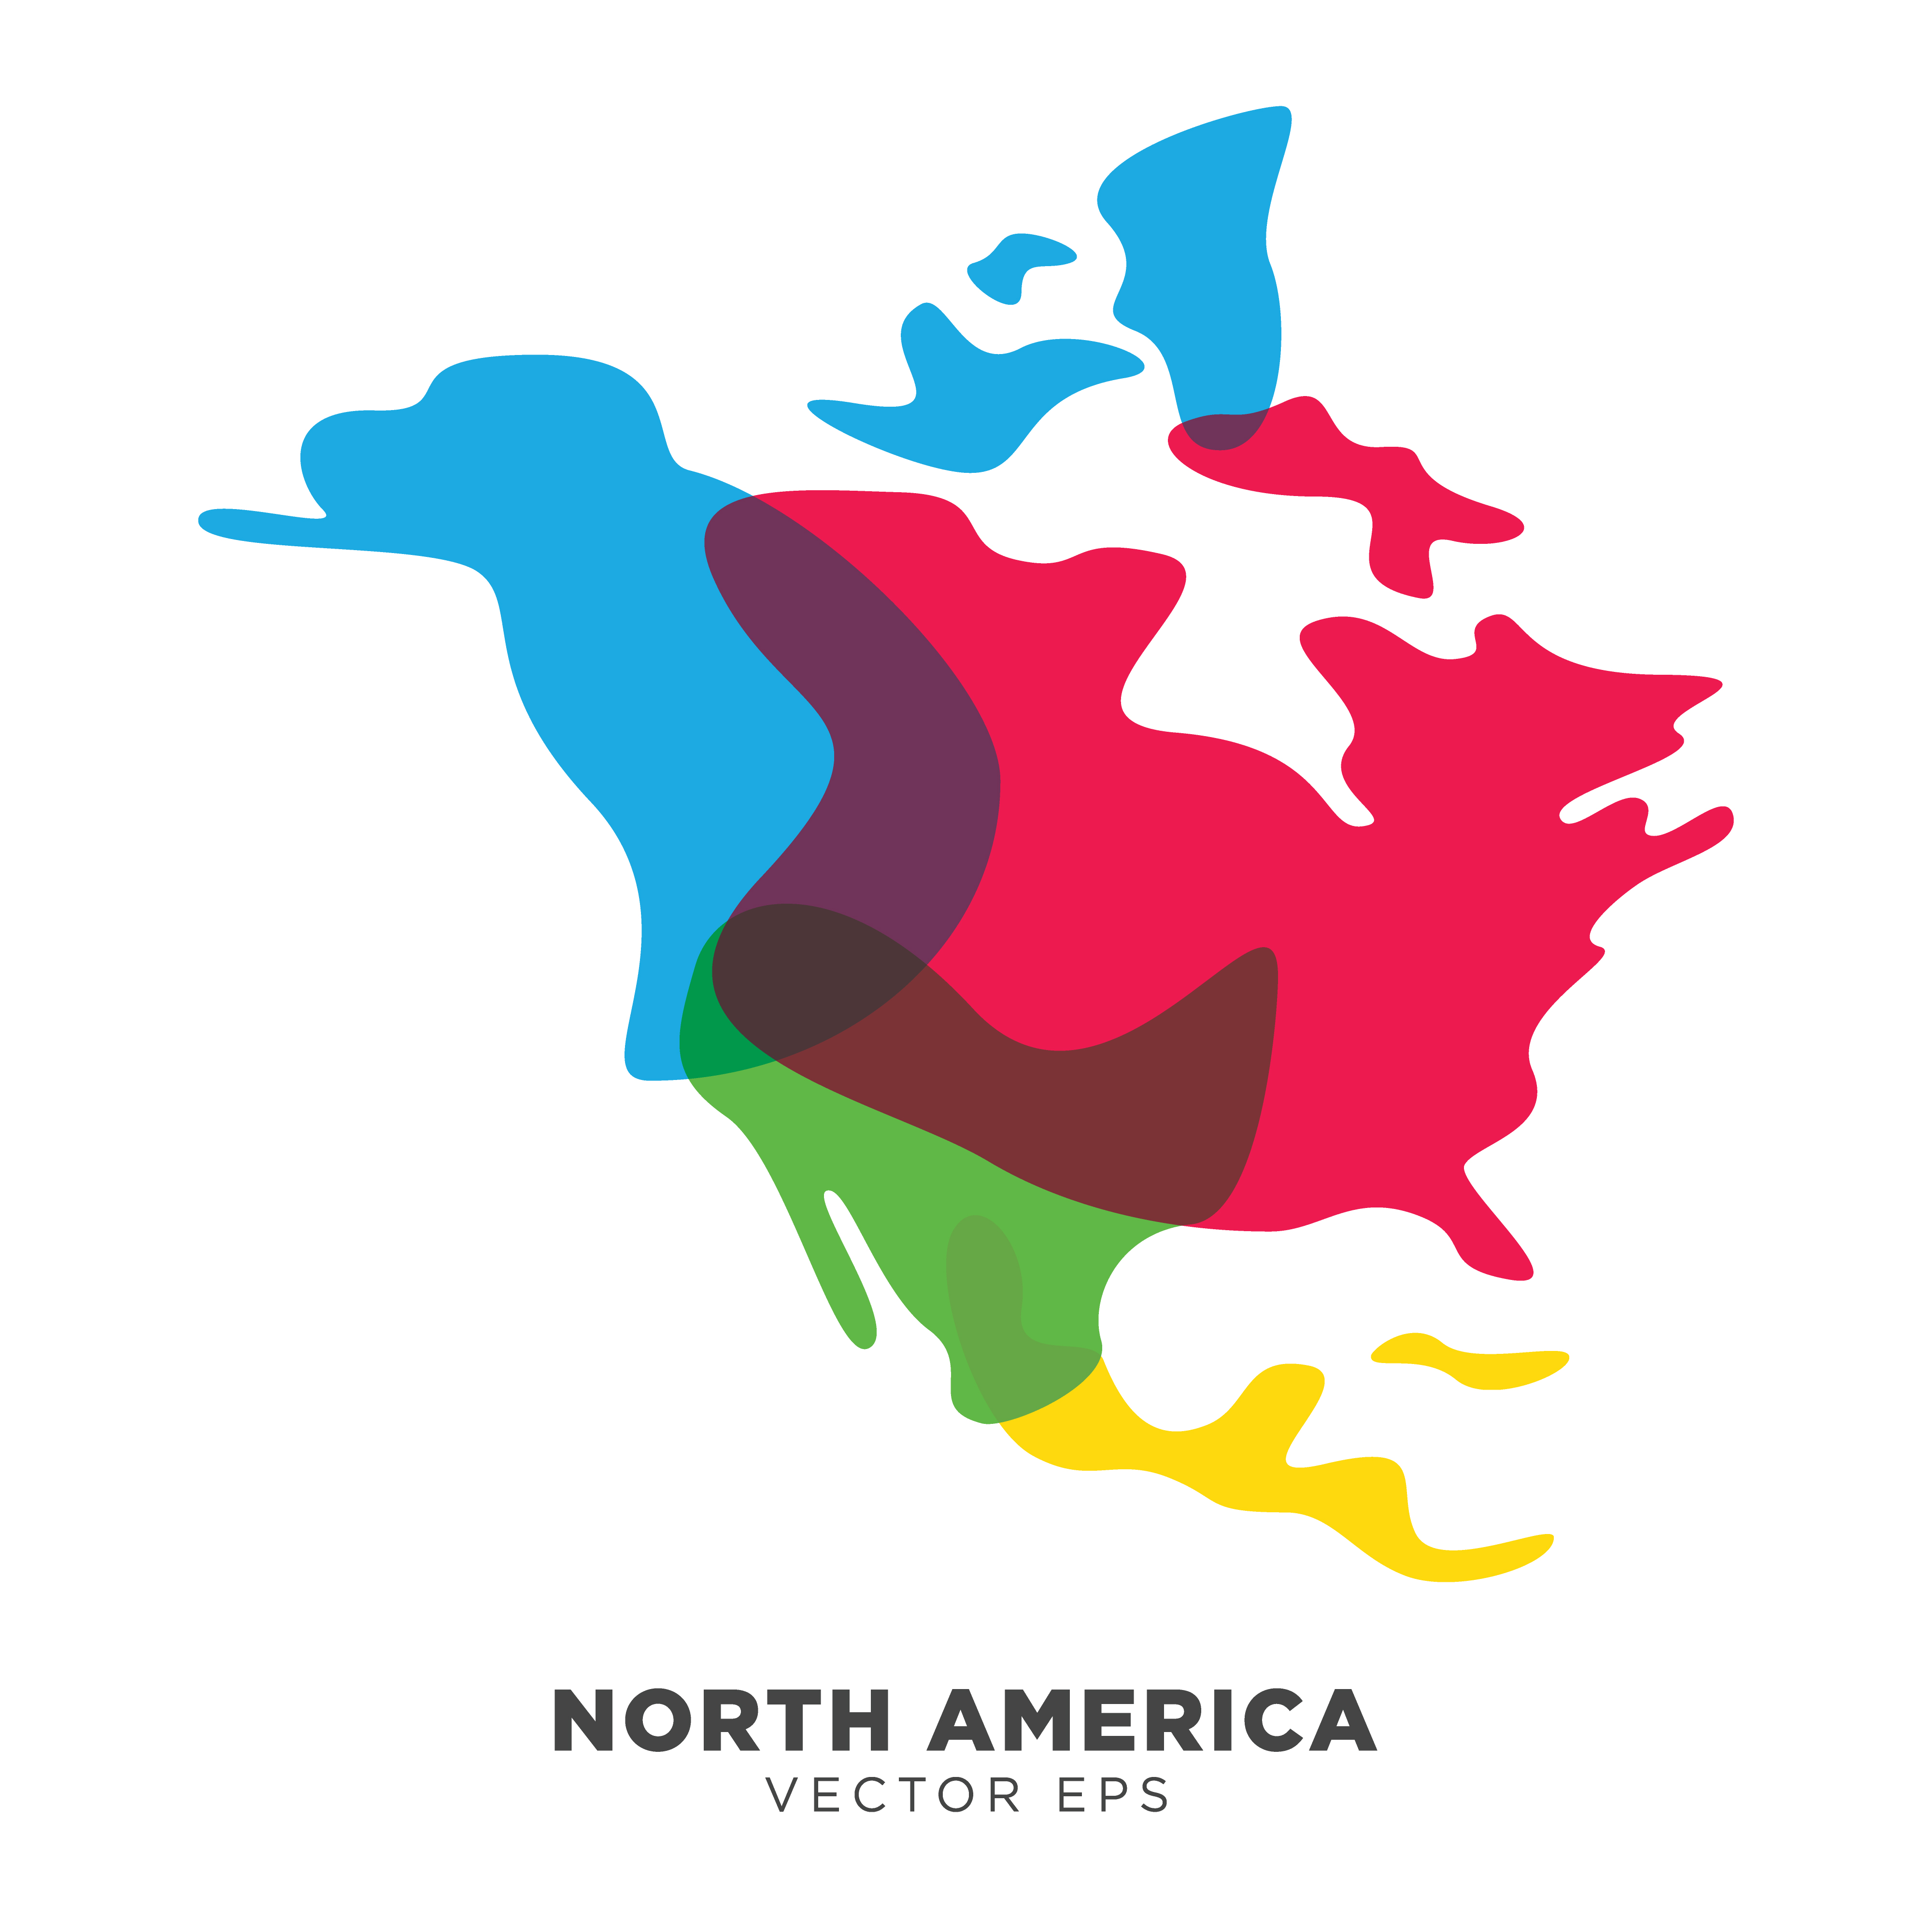 Download Creative North America Map Vector, vector eps 10 ...